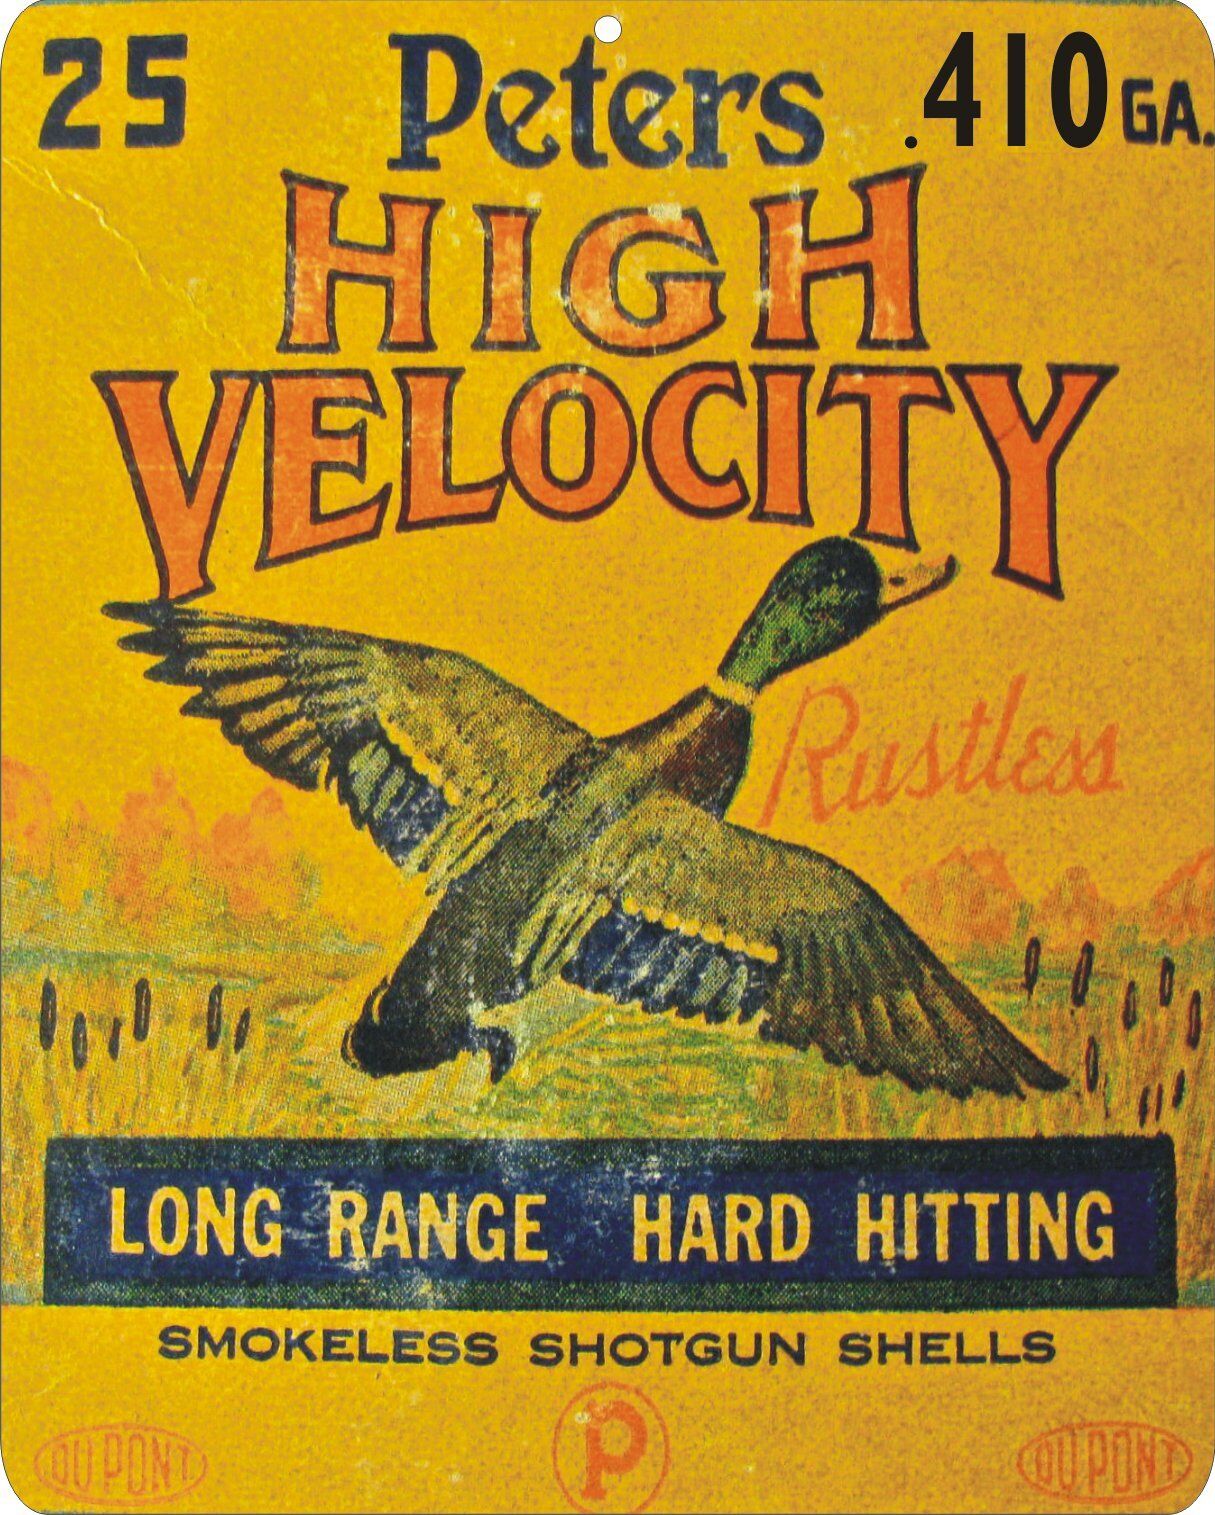 Peters High Velocity .410 gauge old shotgun shell box nostalgic metal sign